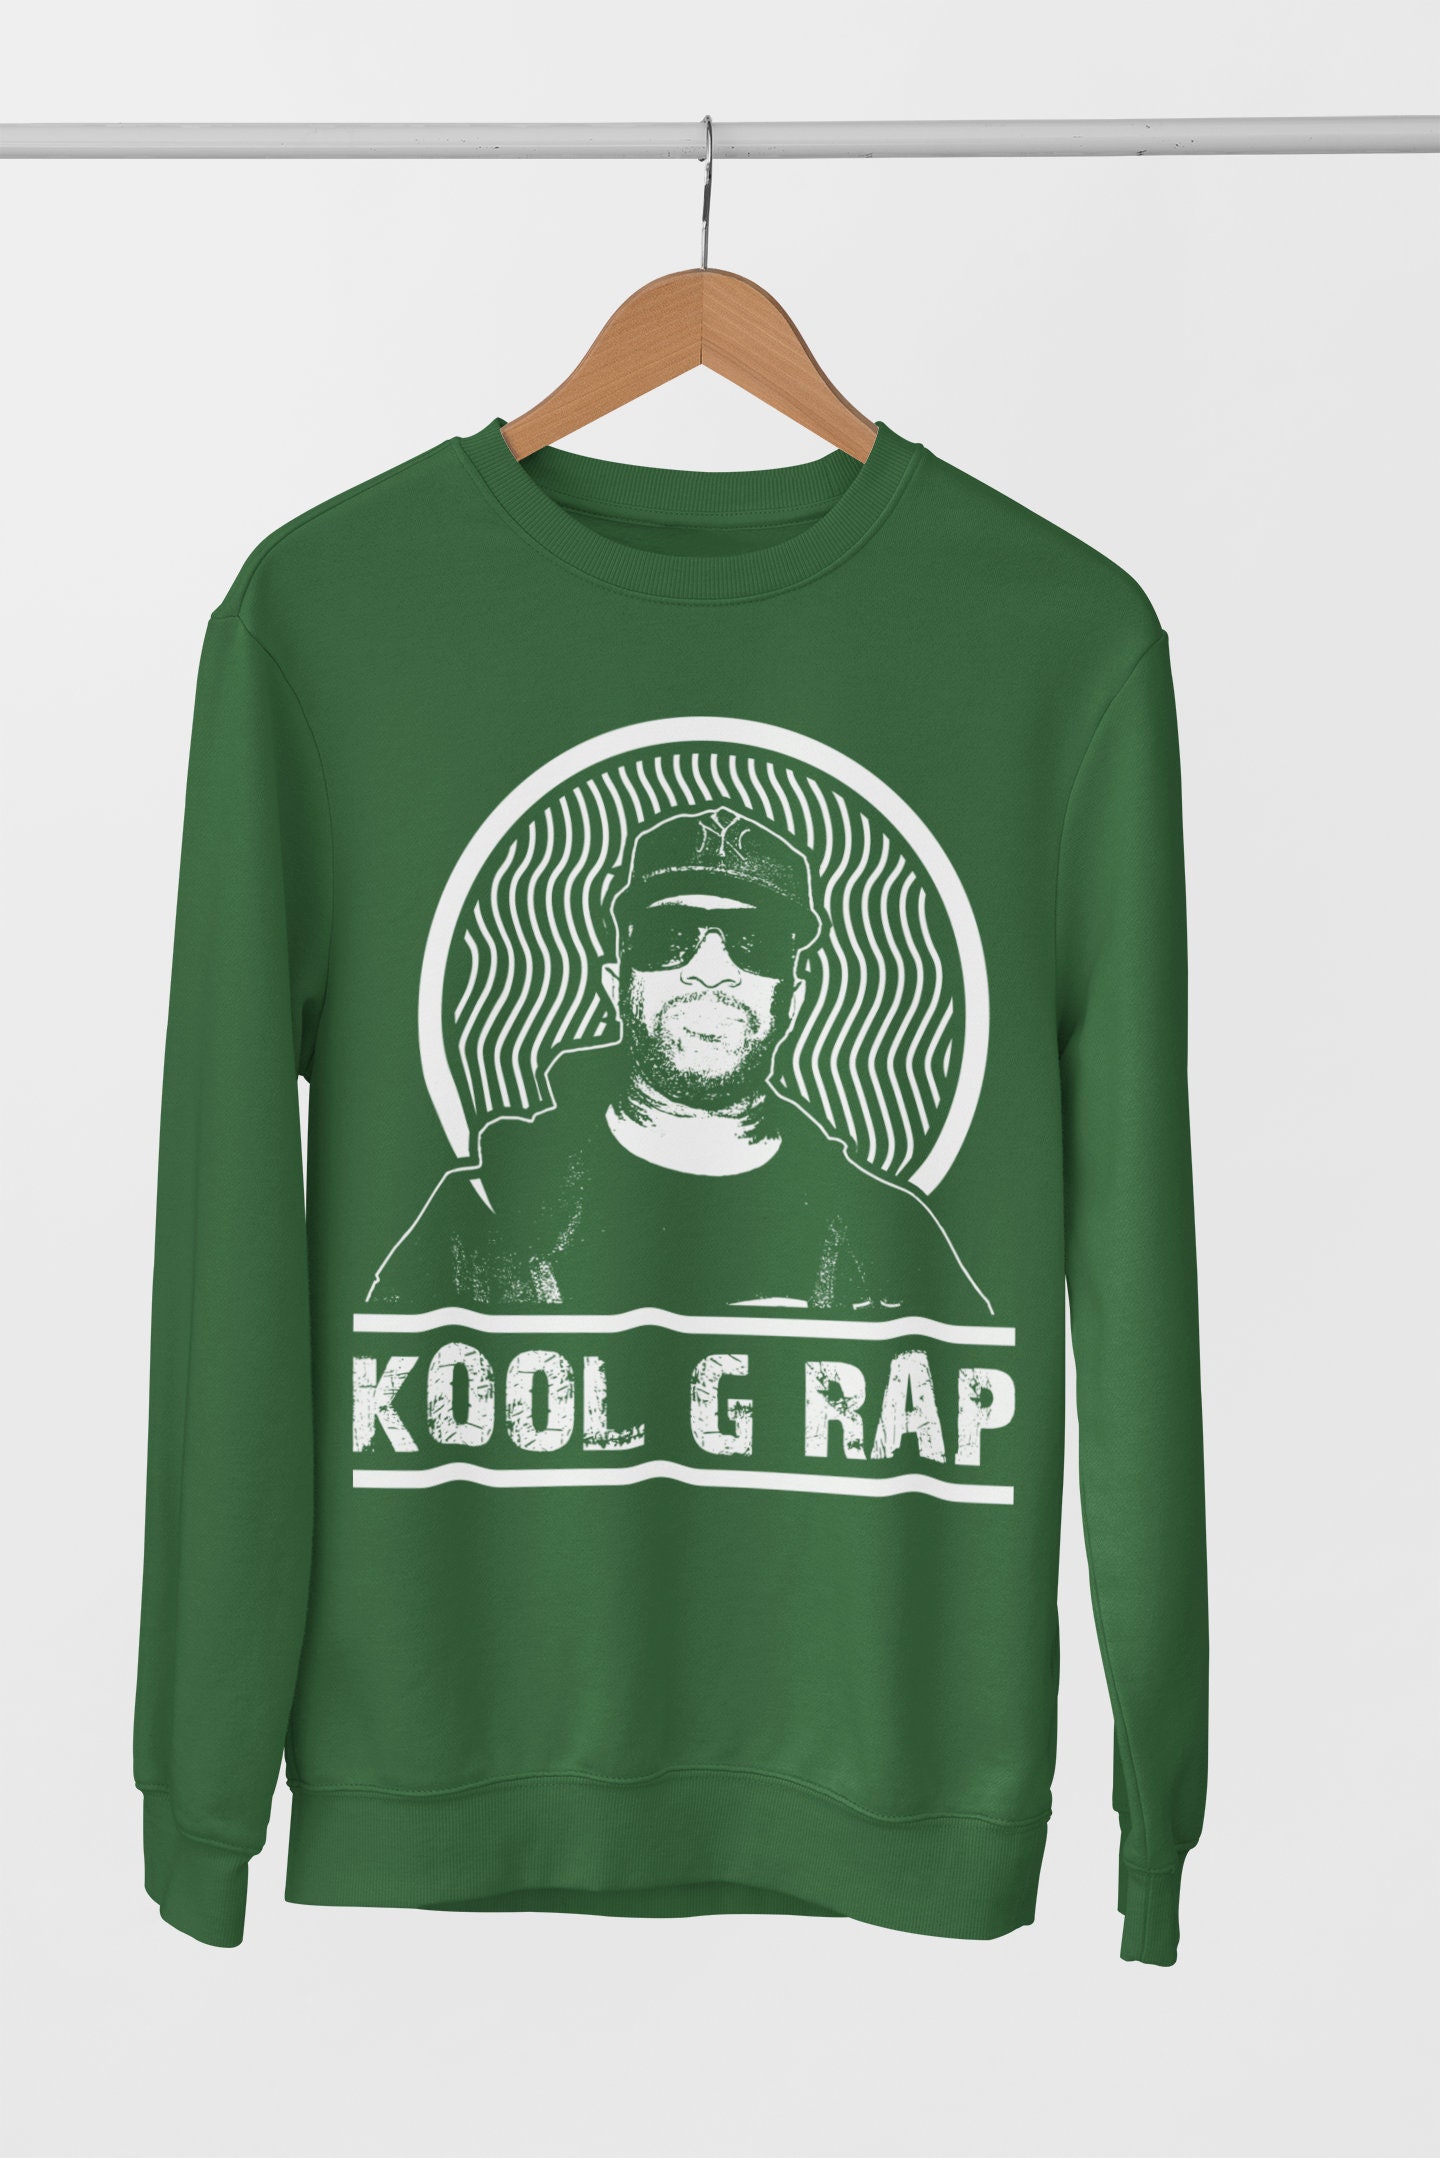 Kool G Rap Hip Hop Sweatshirt 90s Rap Clothing Rapper Shirt - Etsy